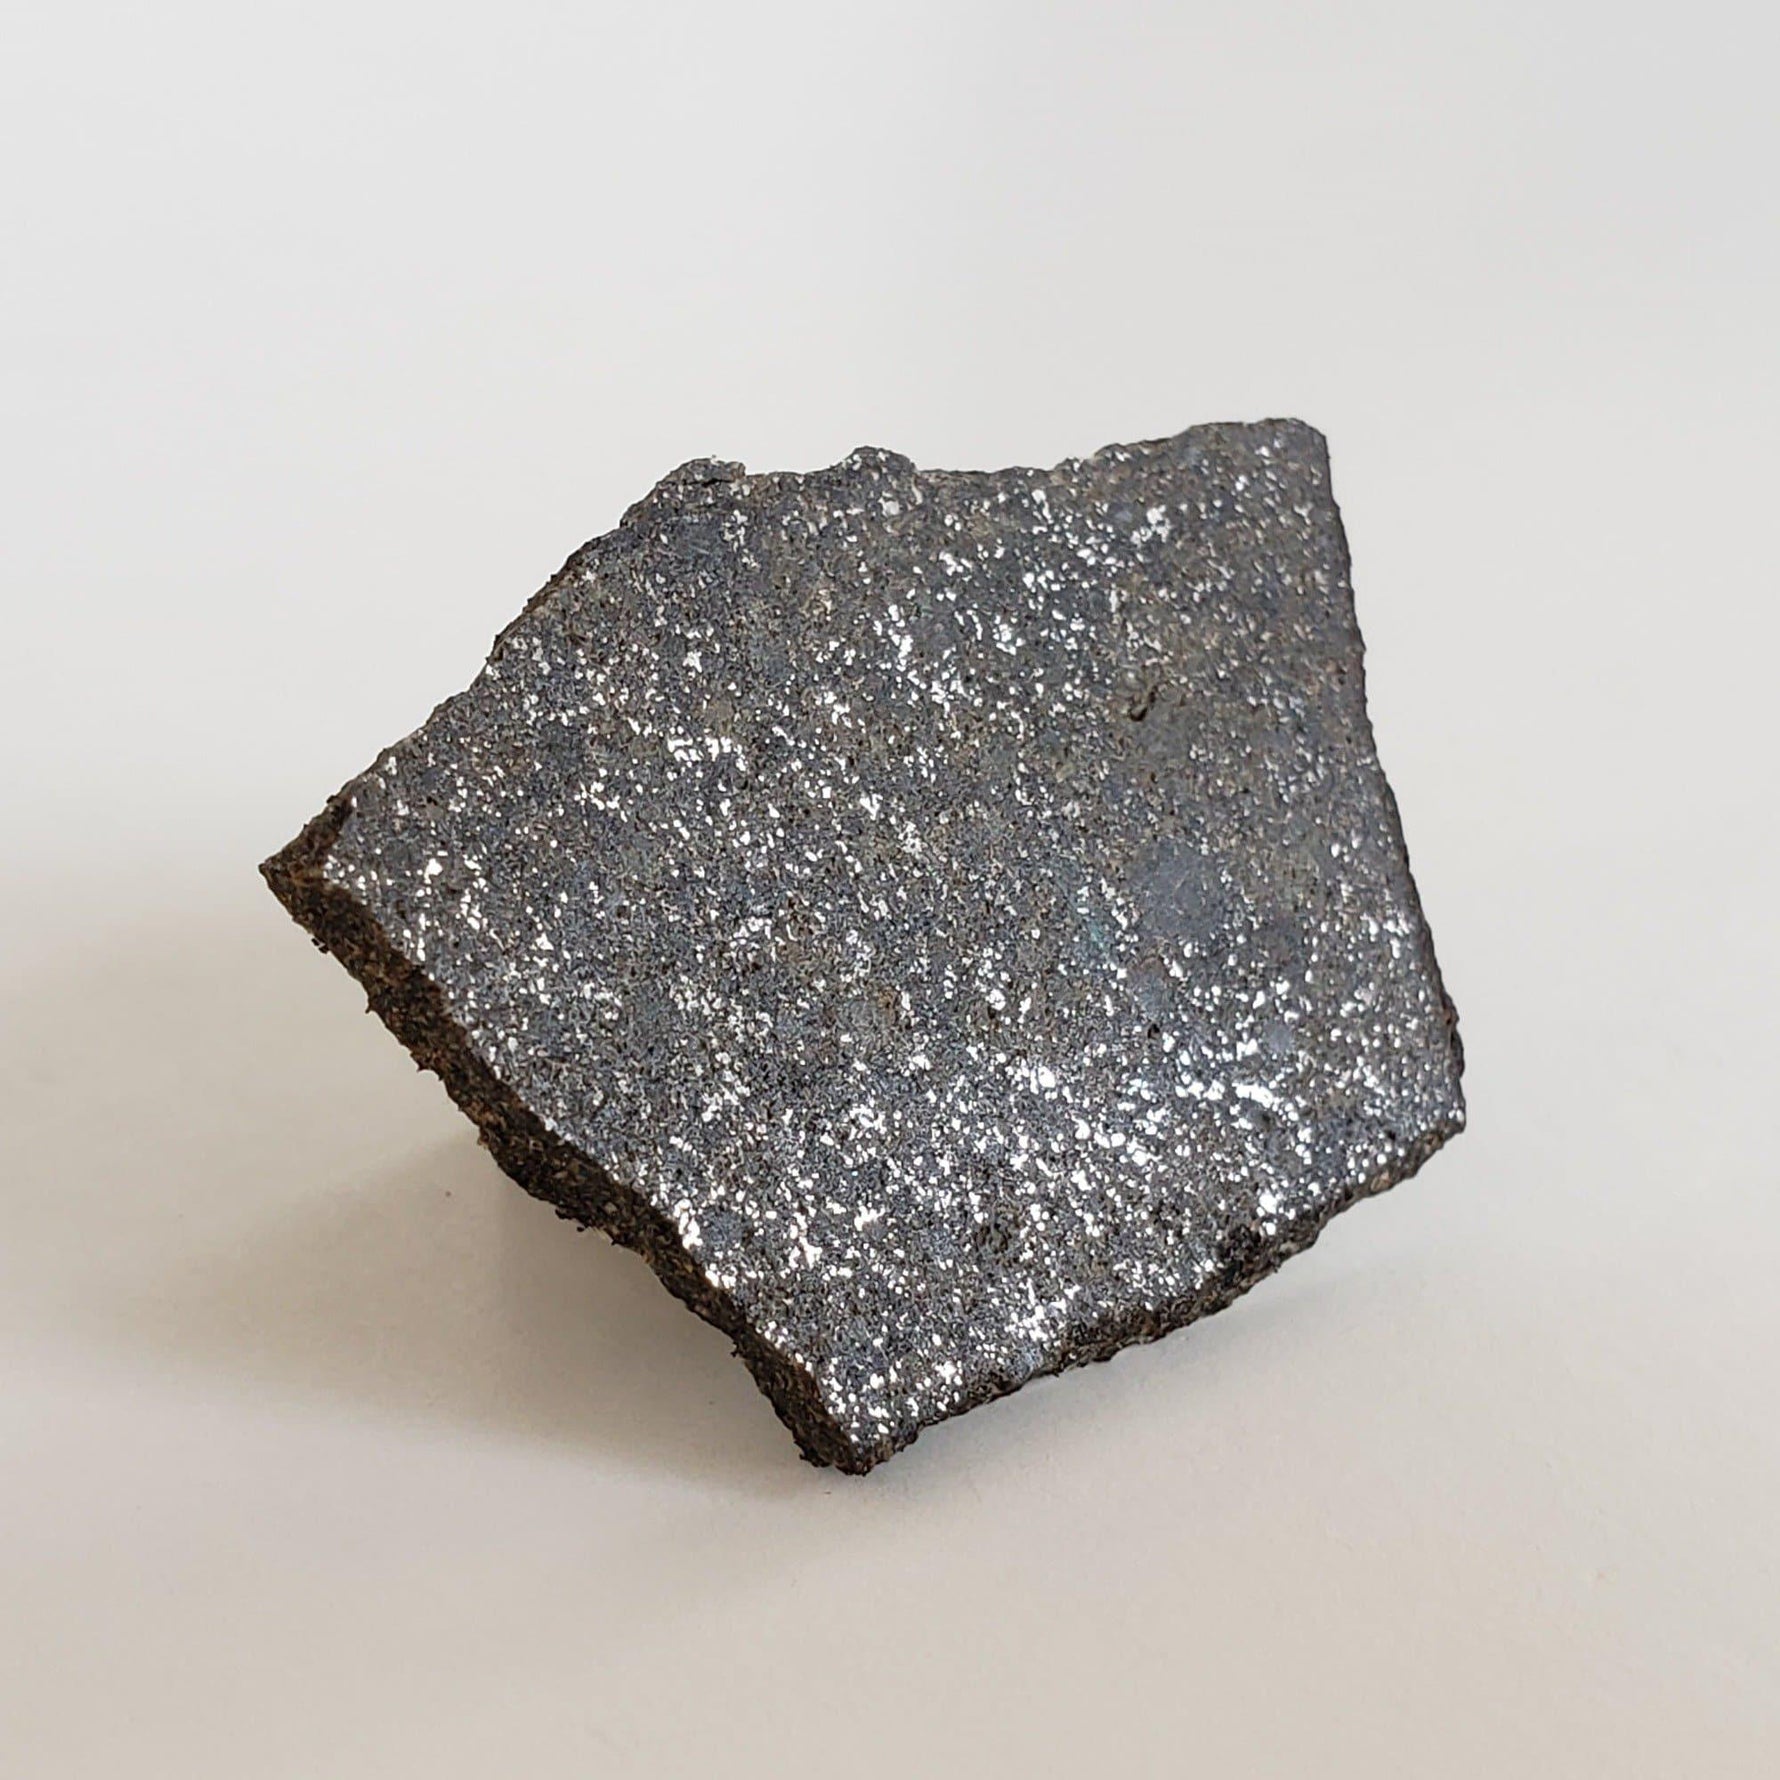 Big Rock Donga Meteorite | 3.98 Grams | Slice | H6 Chondrite | Australia | Canagem.com